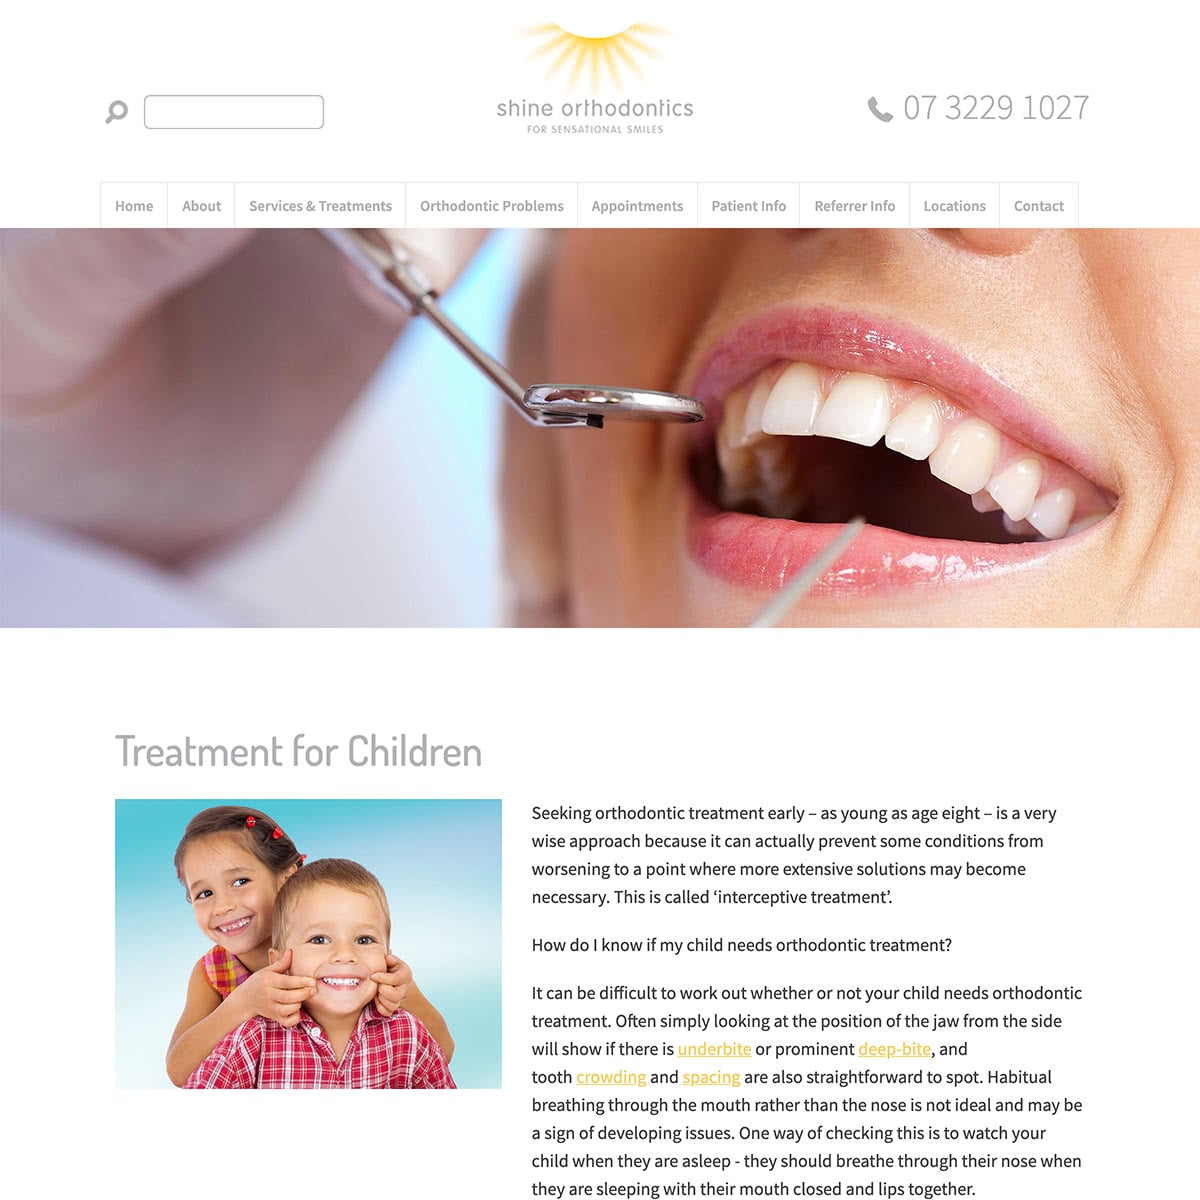 Shine Orthodontics - Services and Treatments